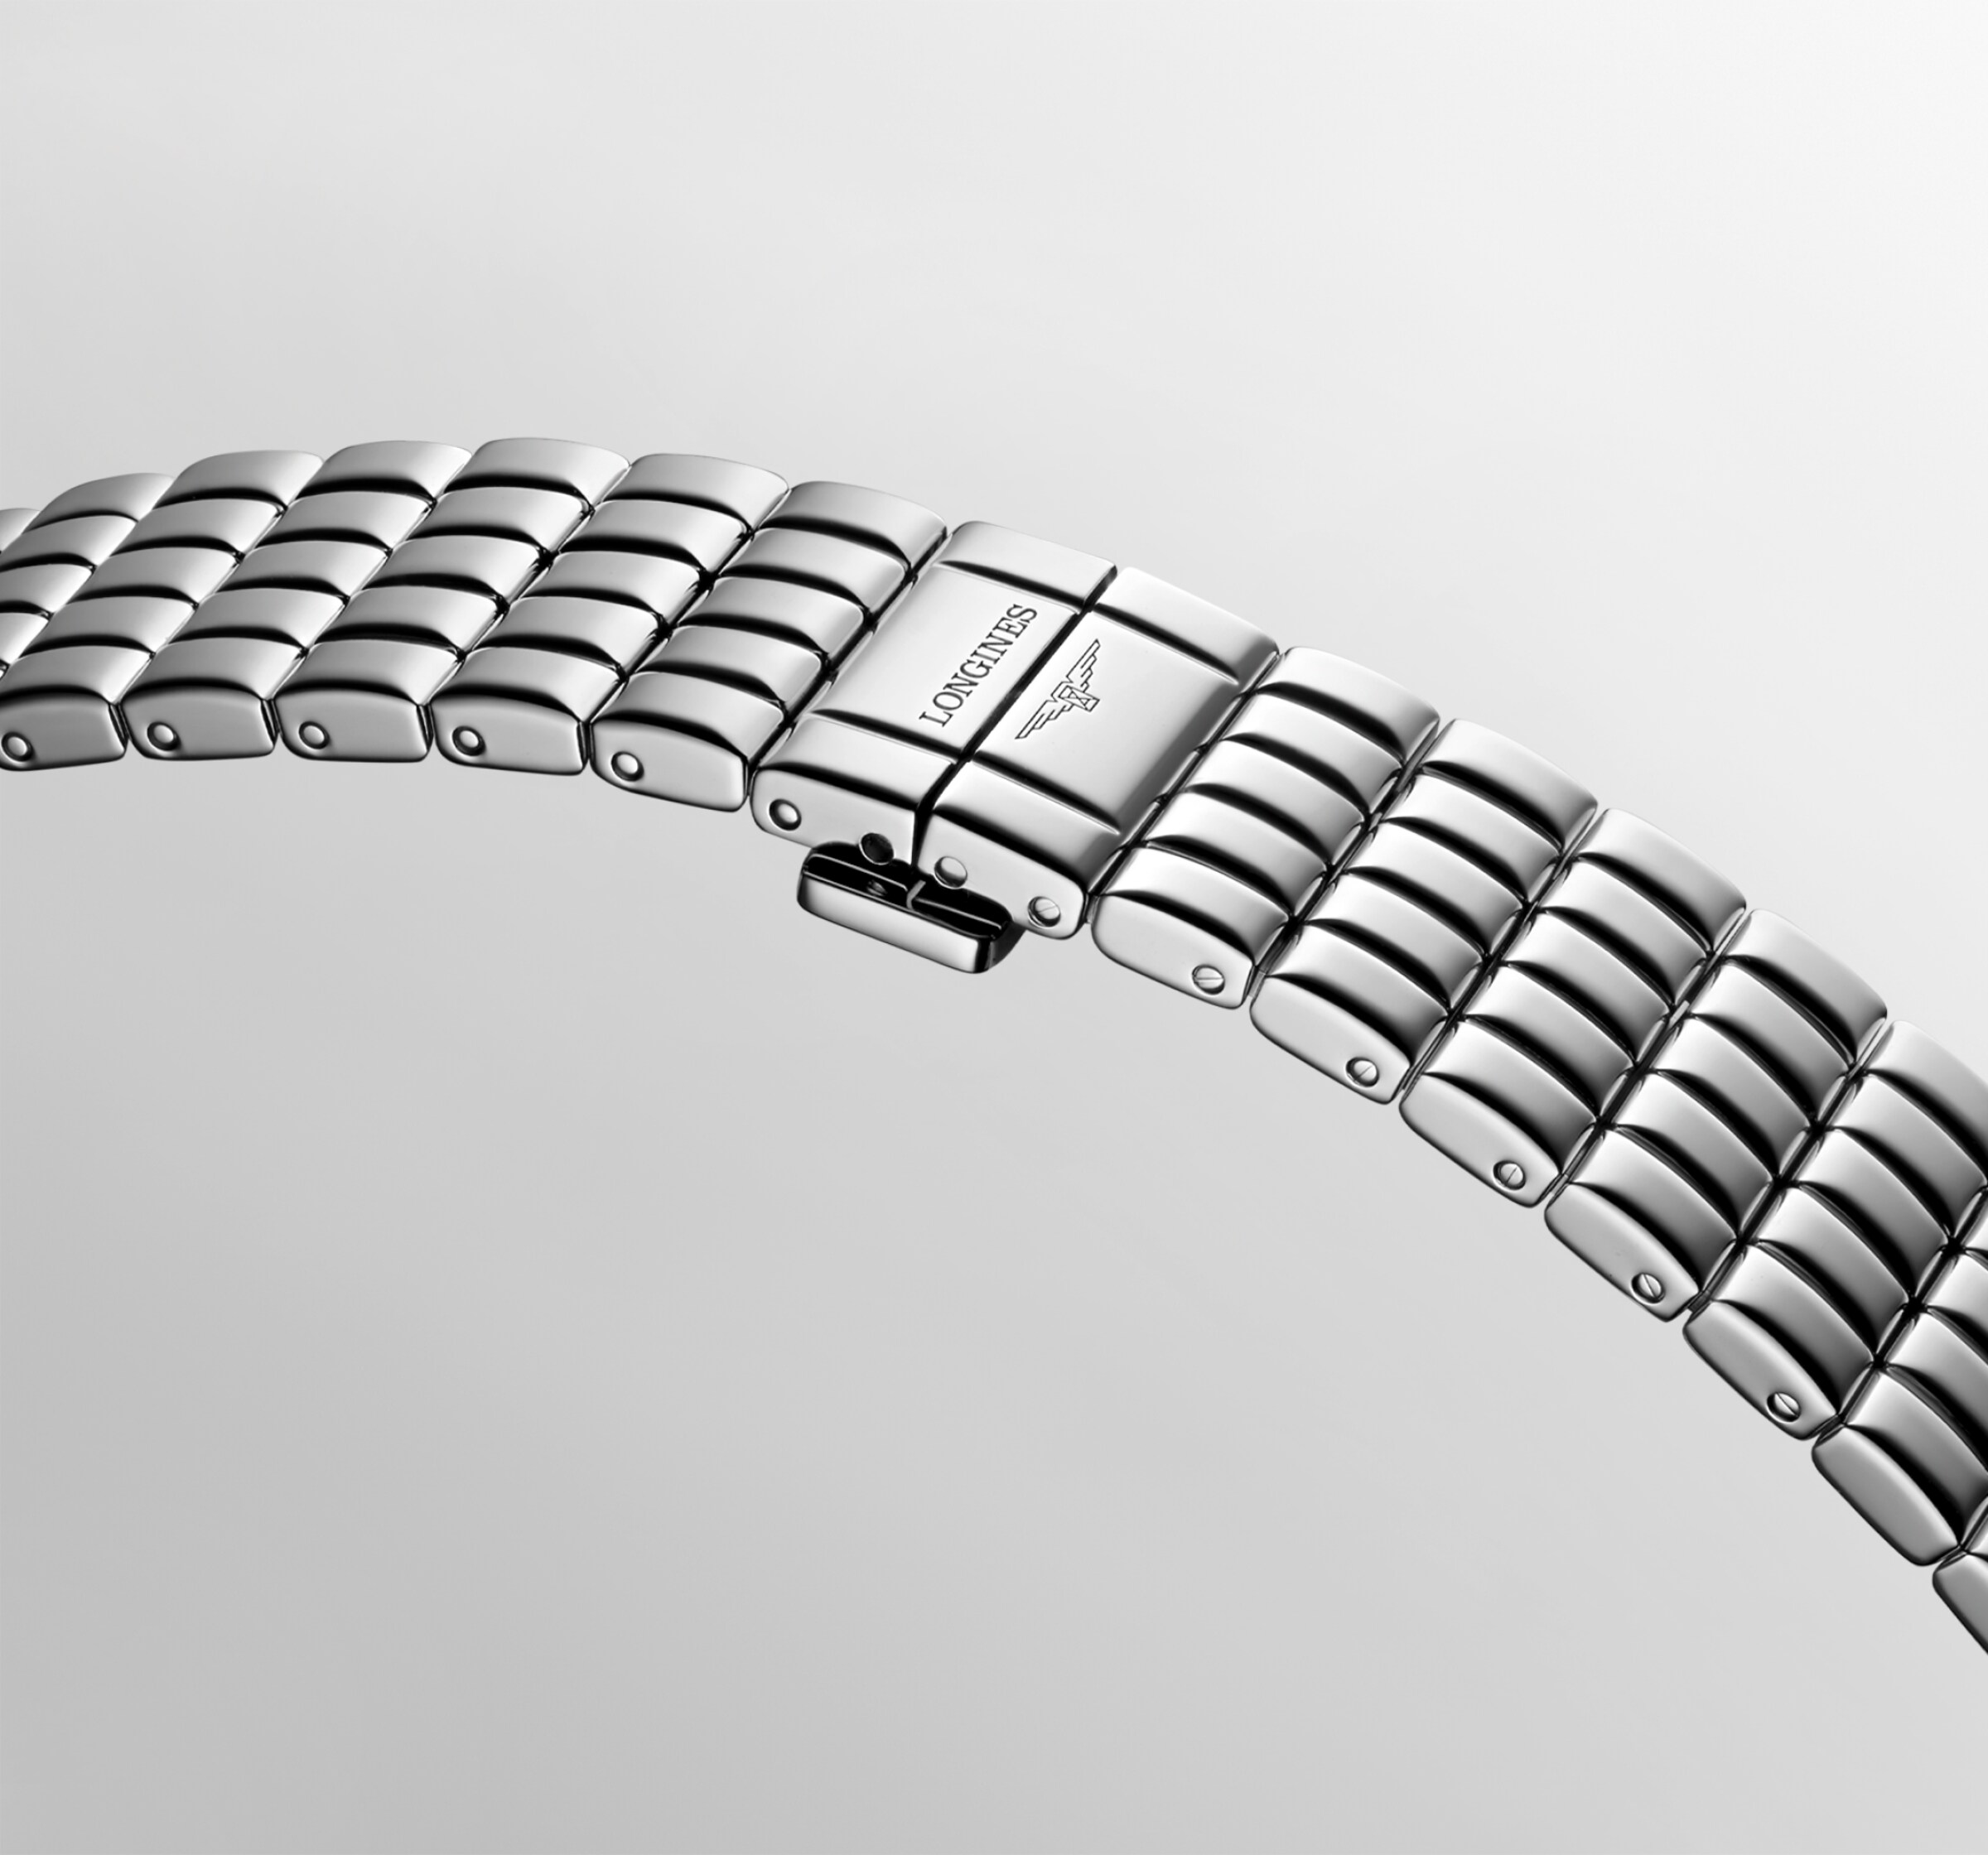 Longines MINI DOLCEVITA Quartz Stainless steel Watch - L5.200.0.71.6